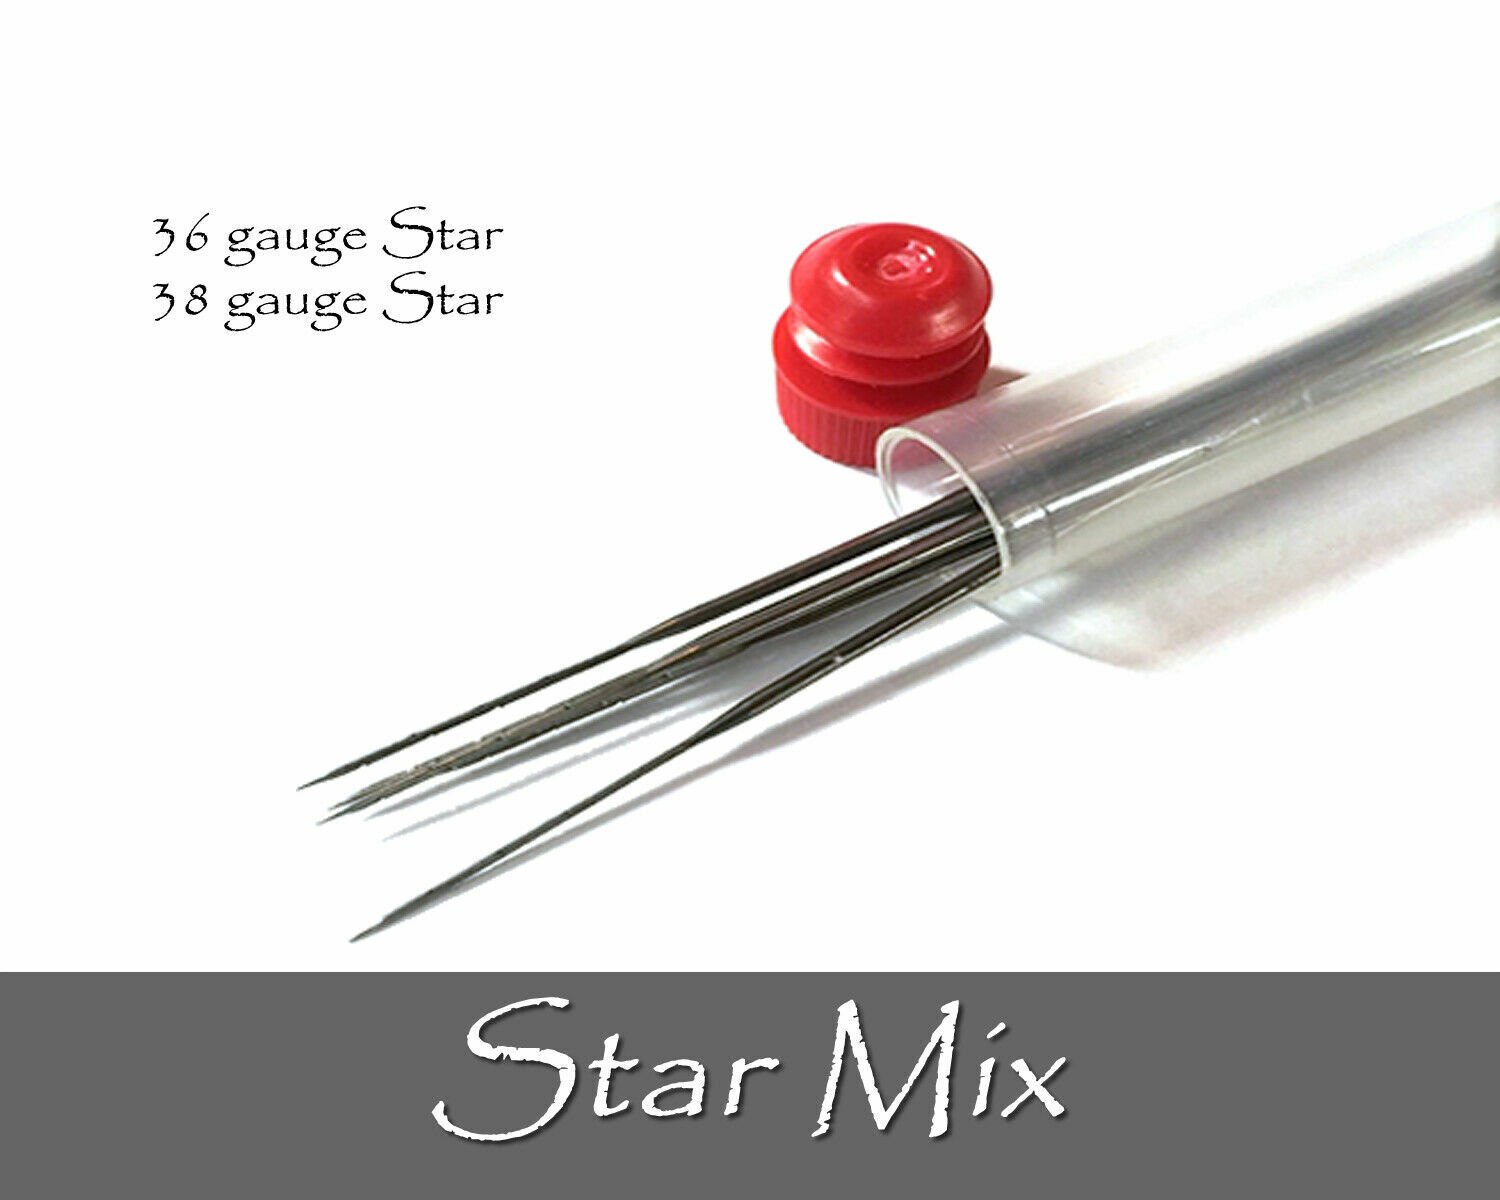 Star Mix New Free shipping / New popularity needles. felting